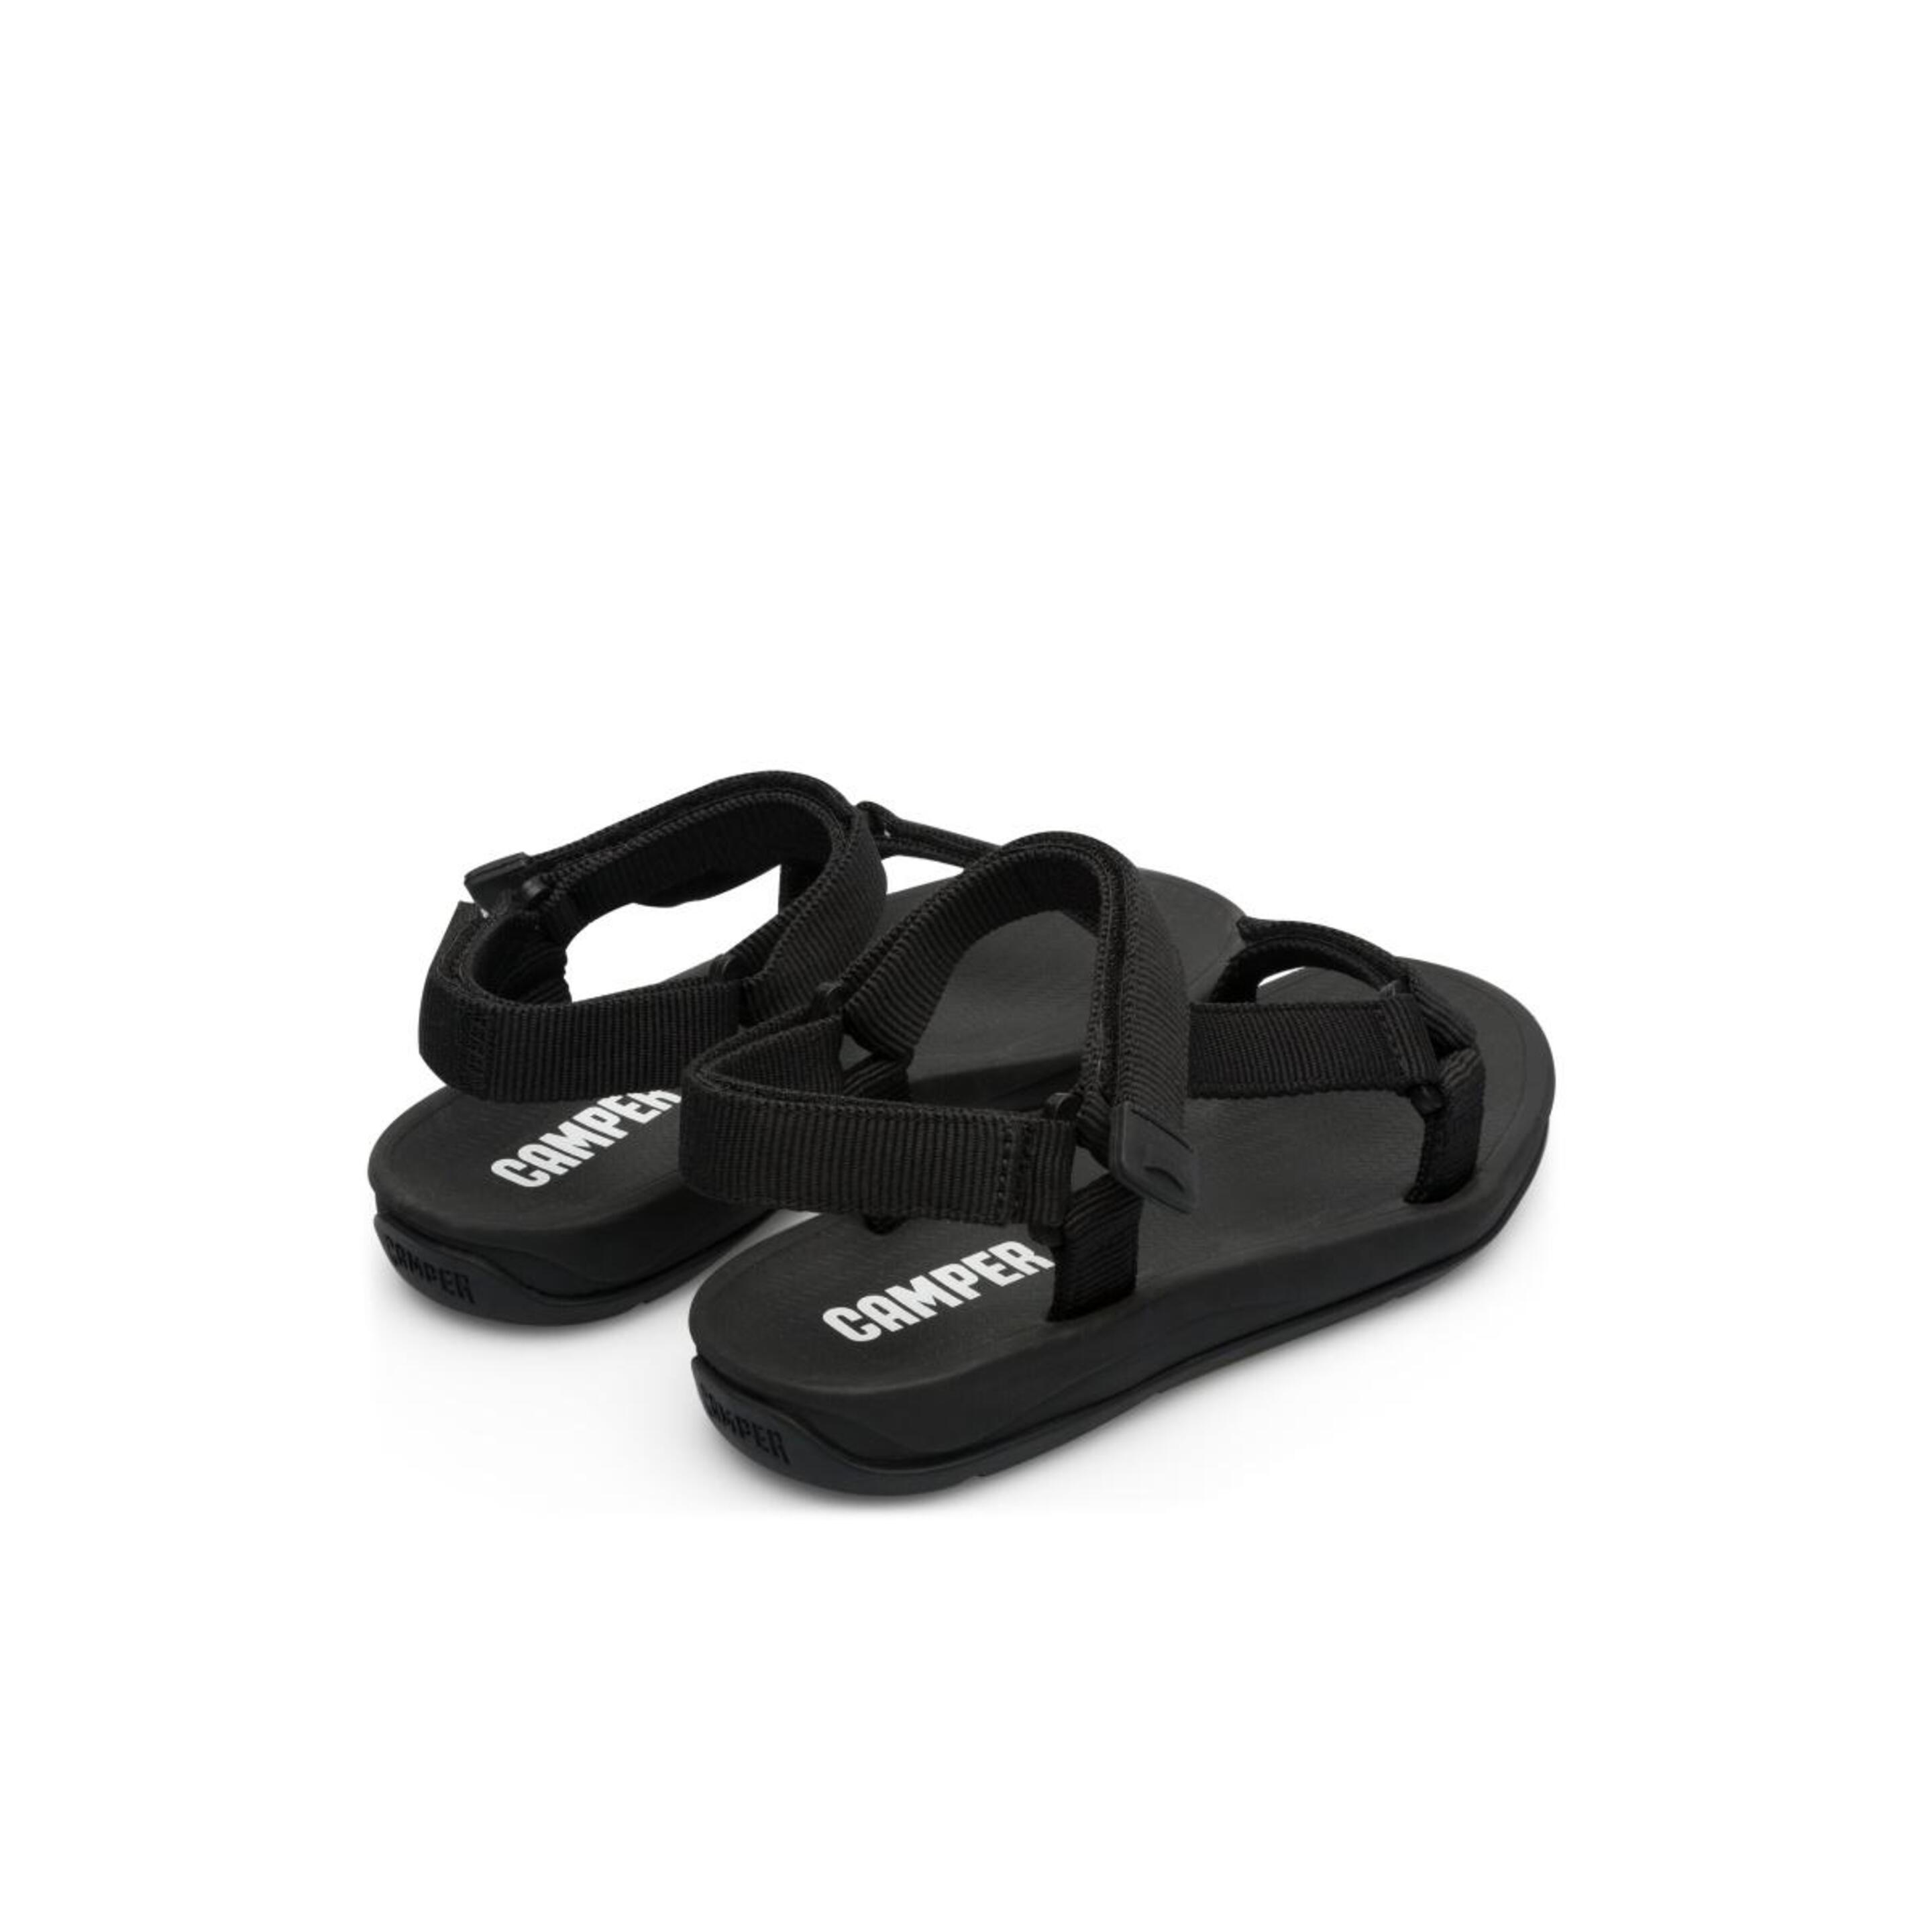 Sandalias Match Camper - negro - Zapatos Mujer  MKP